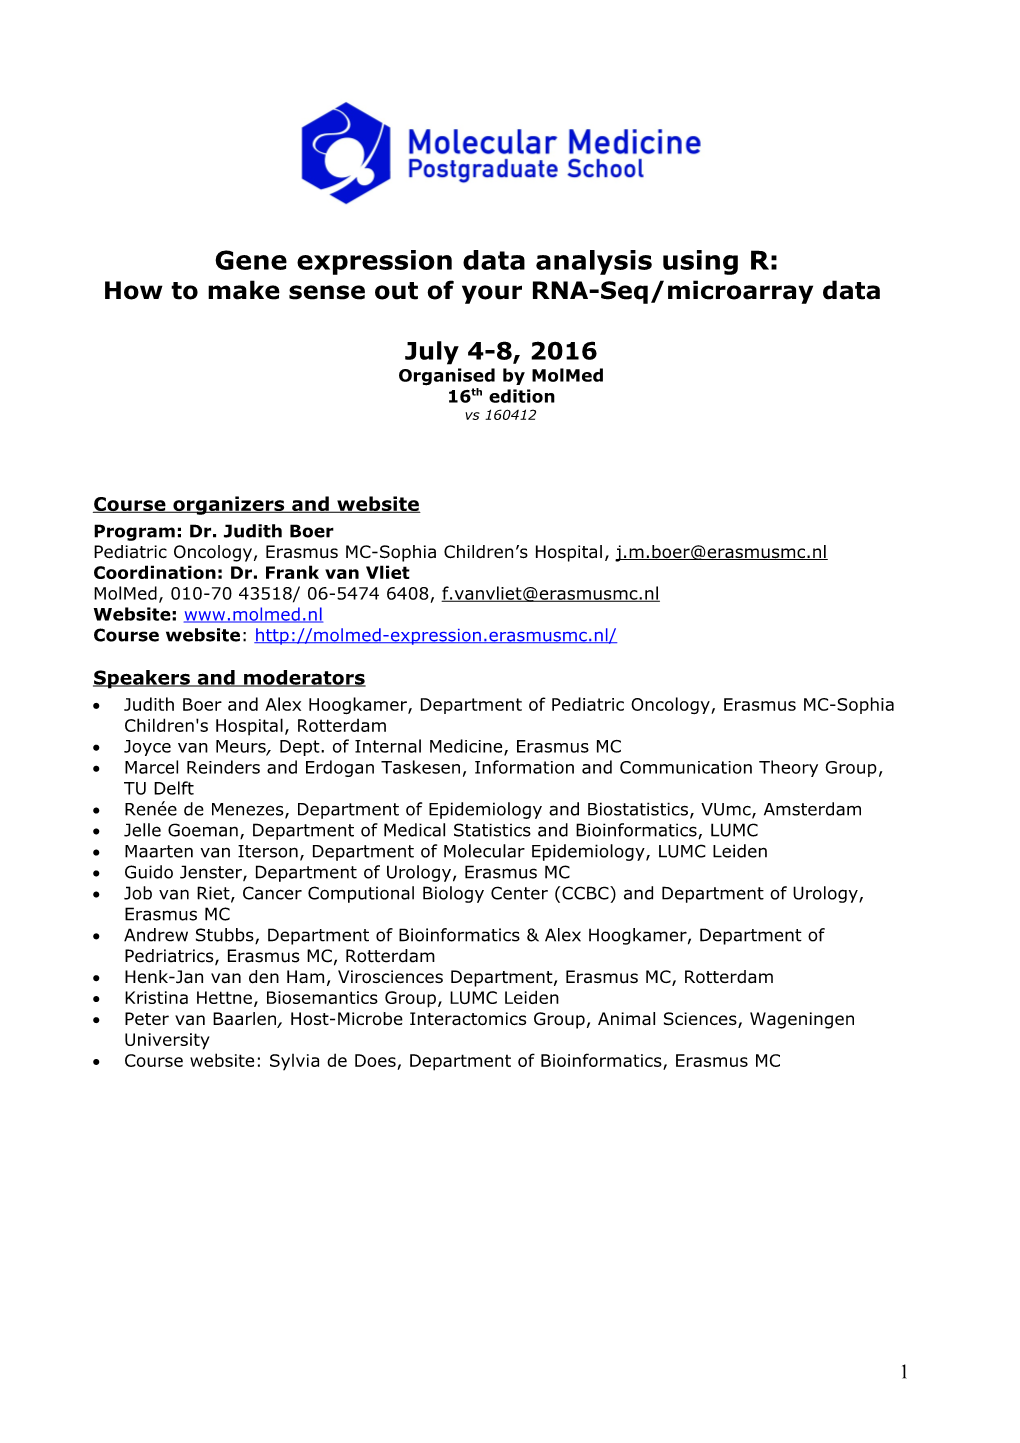 Gene Expression Data Analysis Using R